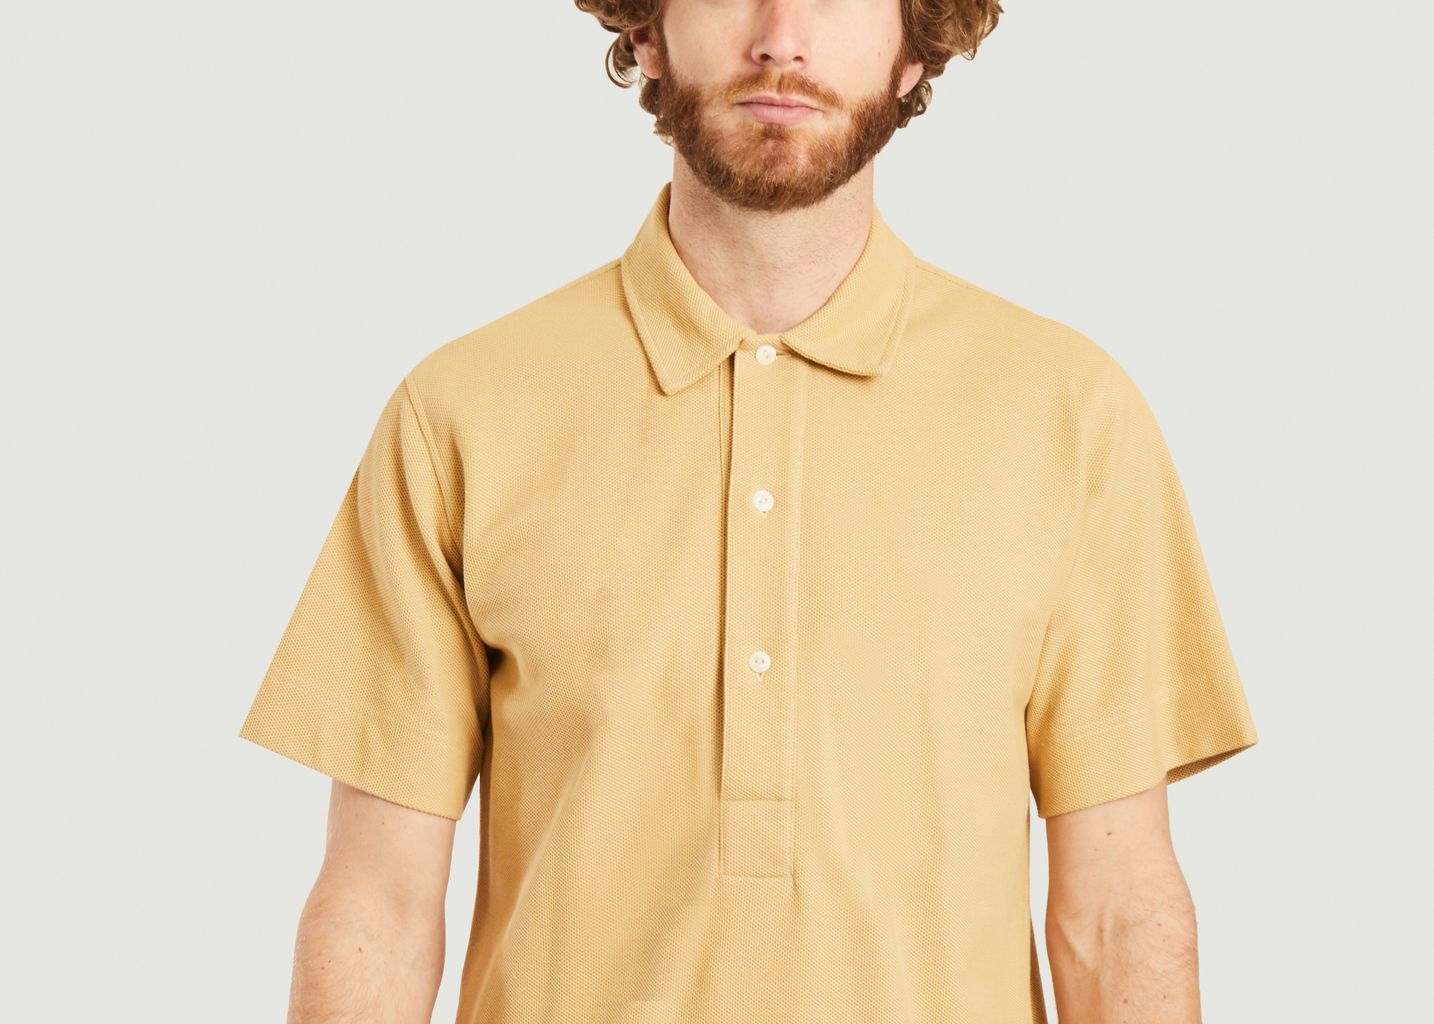 Marcel Polo shirt - Outland